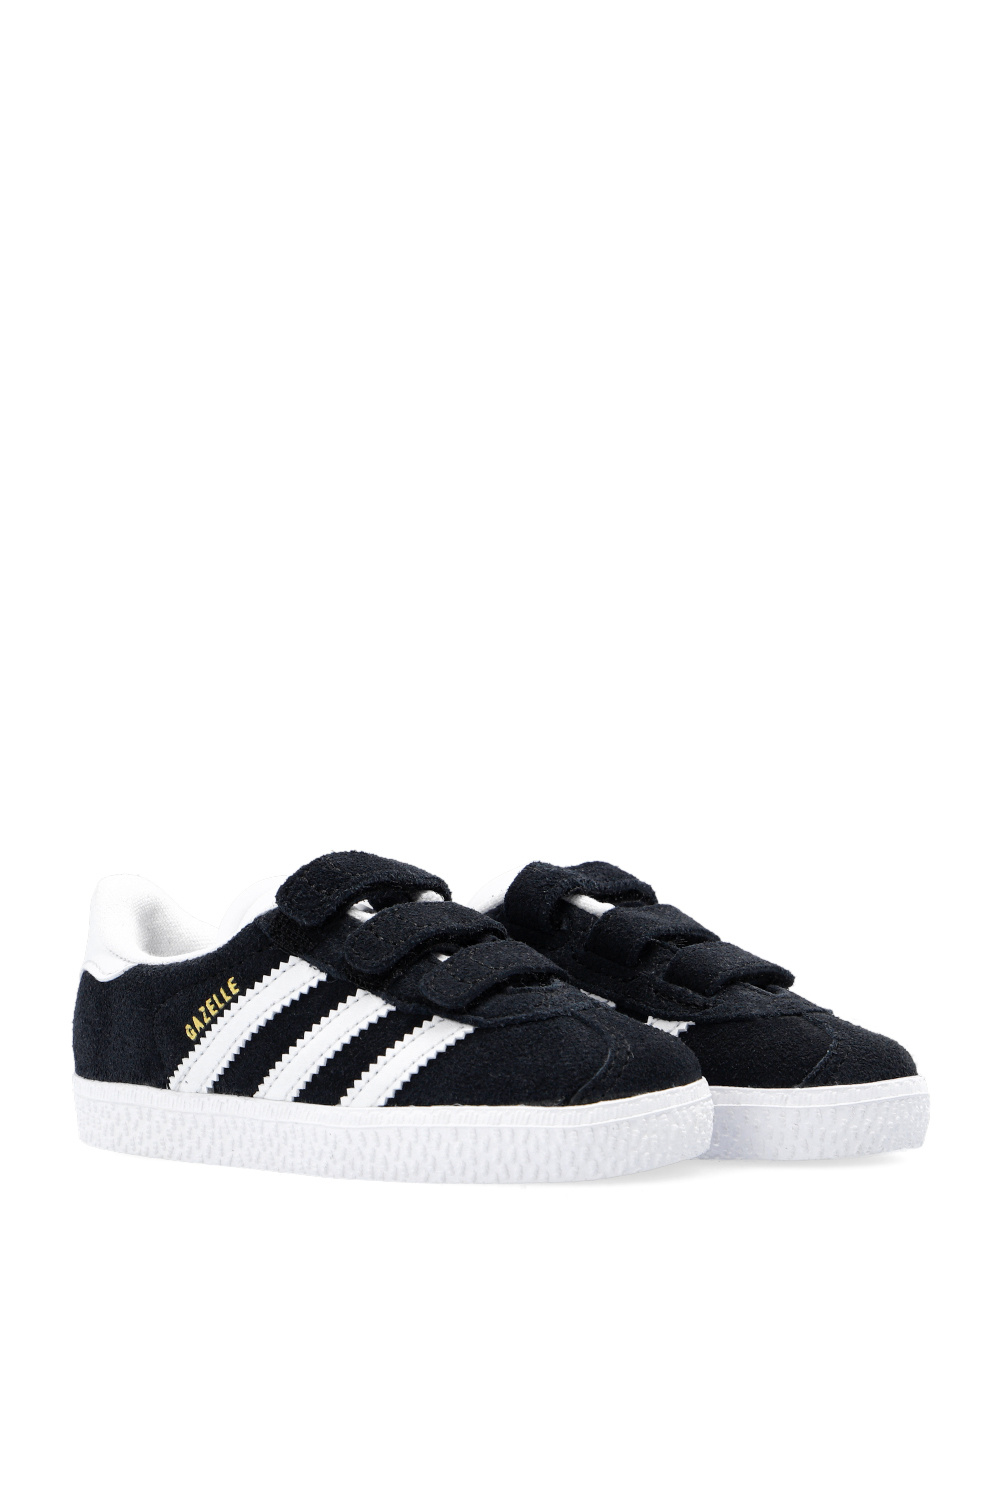 Black ‘Gazelle’ sneakers ADIDAS Kids - Vitkac GB